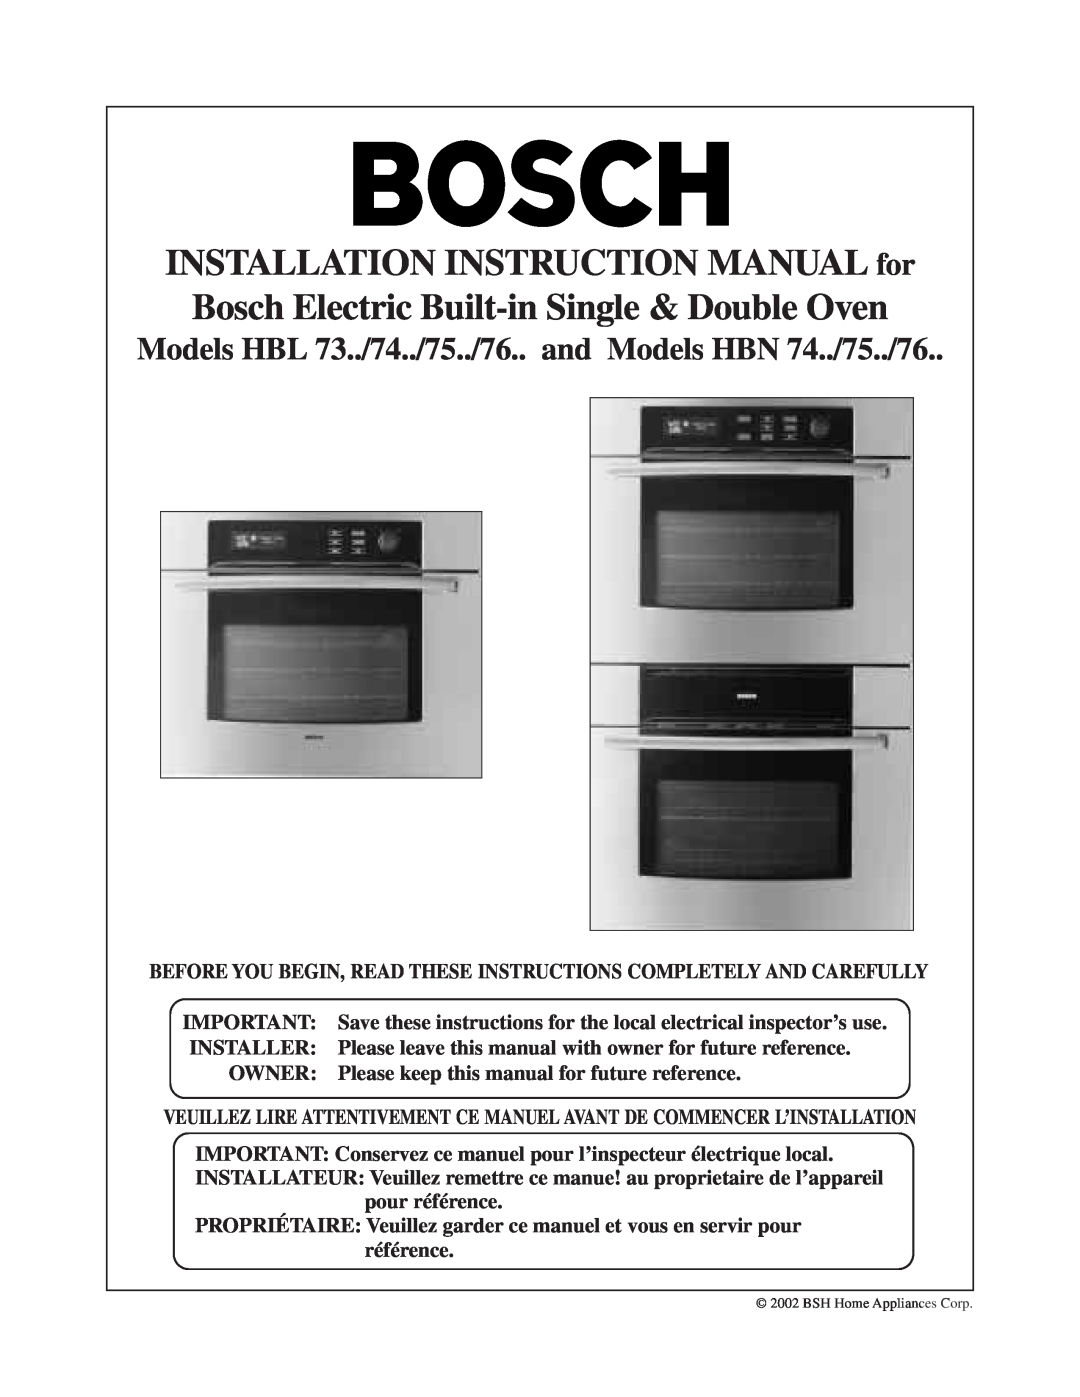 Bosch Appliances HBN 74 instruction manual BSH Home Appliances Corp 